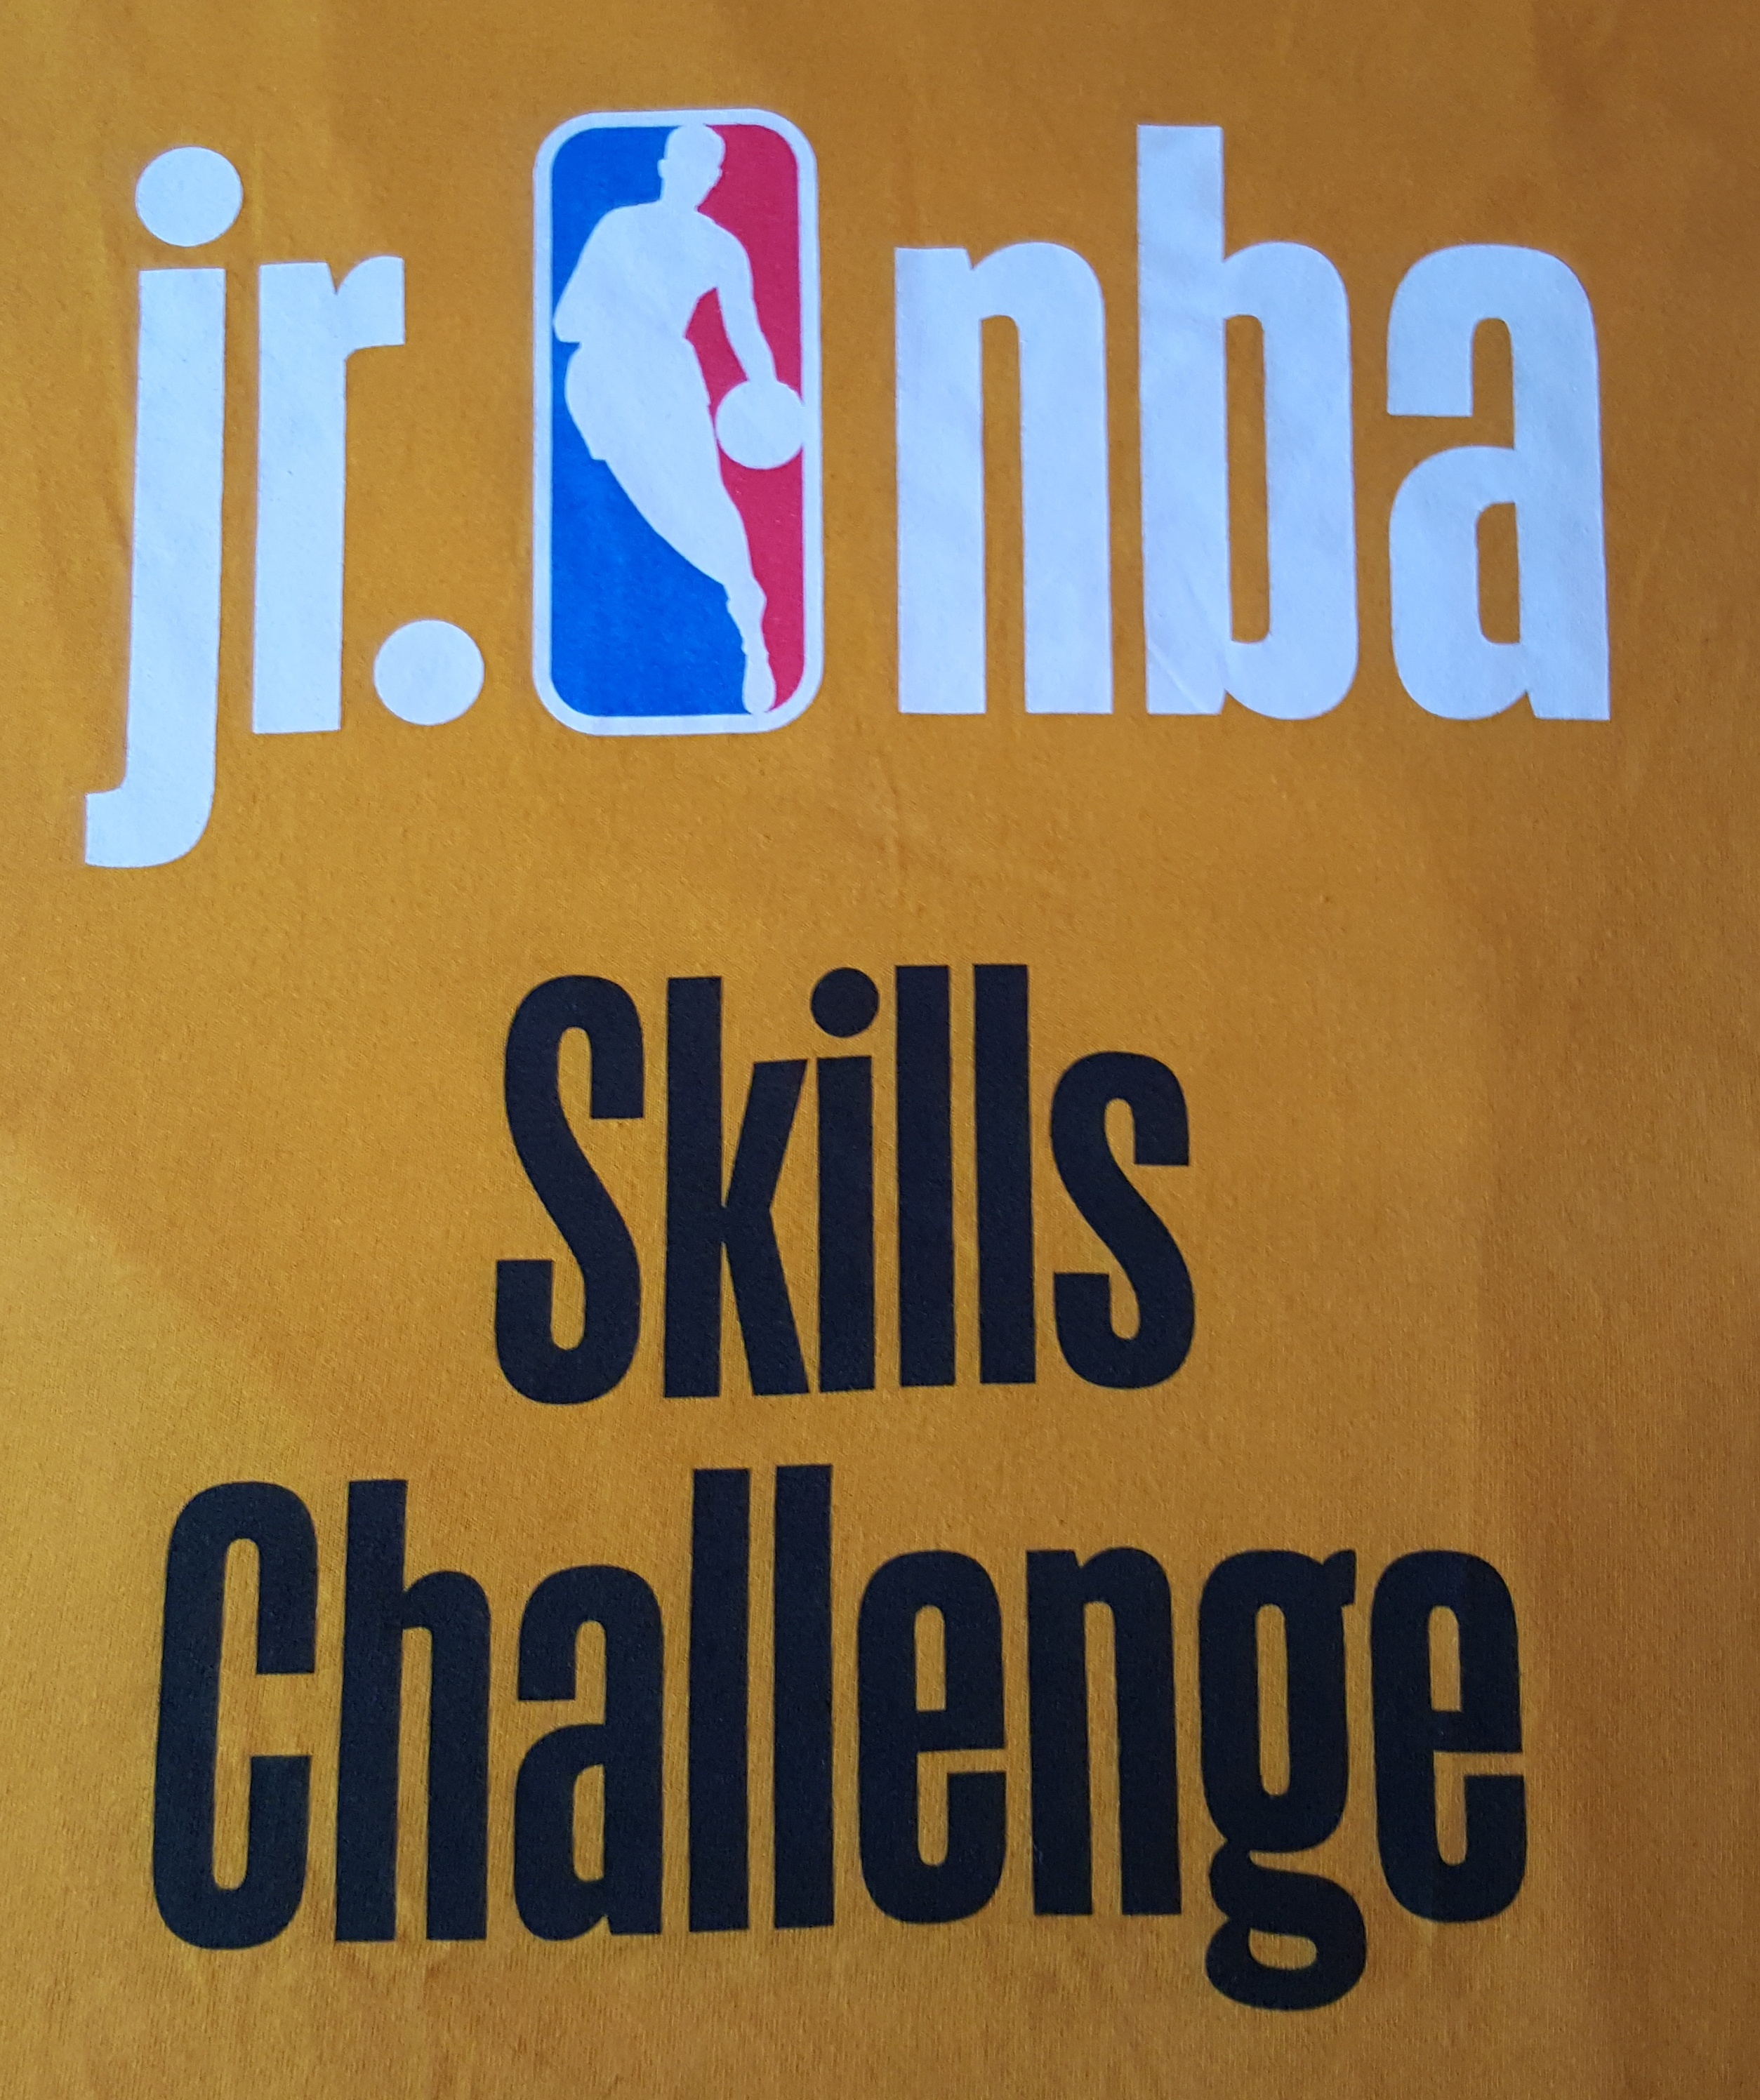 JR NBA Skills Challenge at St. Joseph's